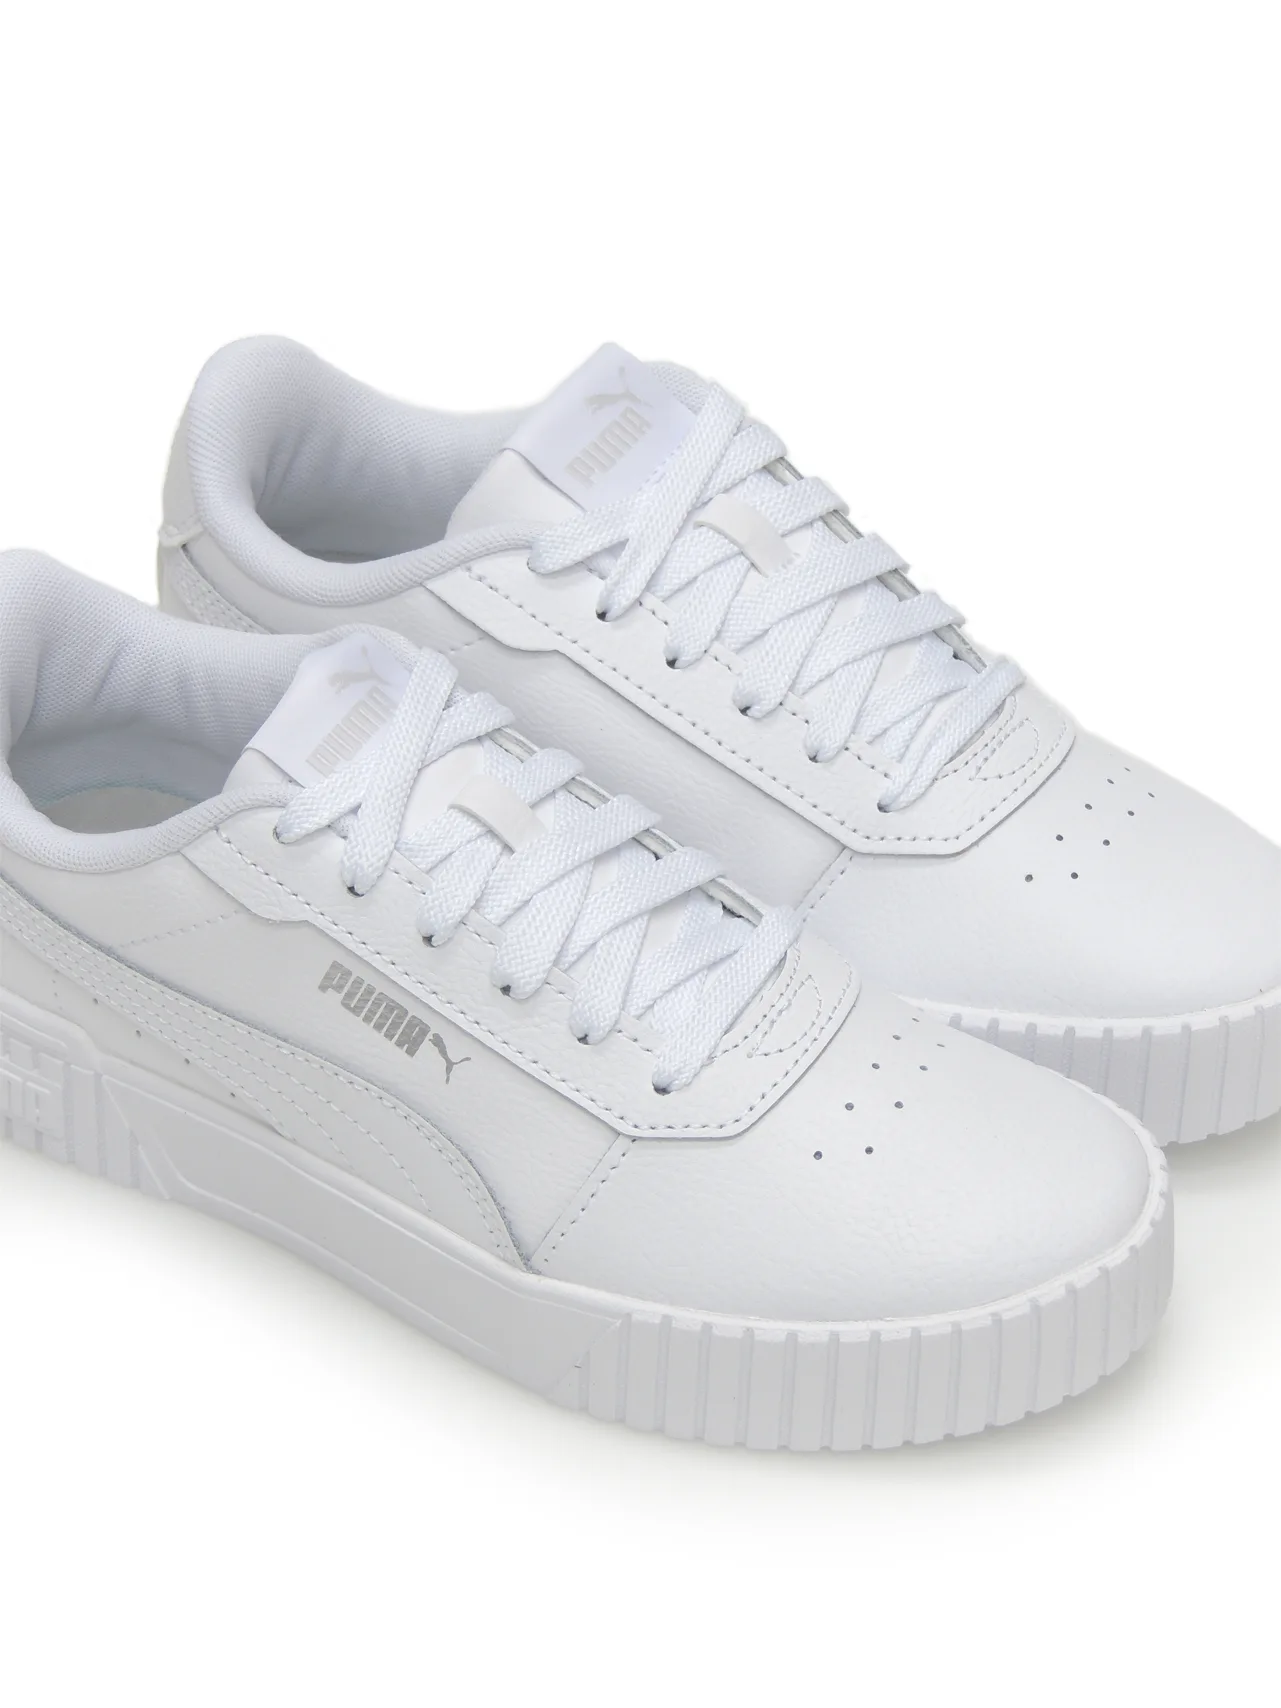 sneakers--puma-385849-piel-blanco